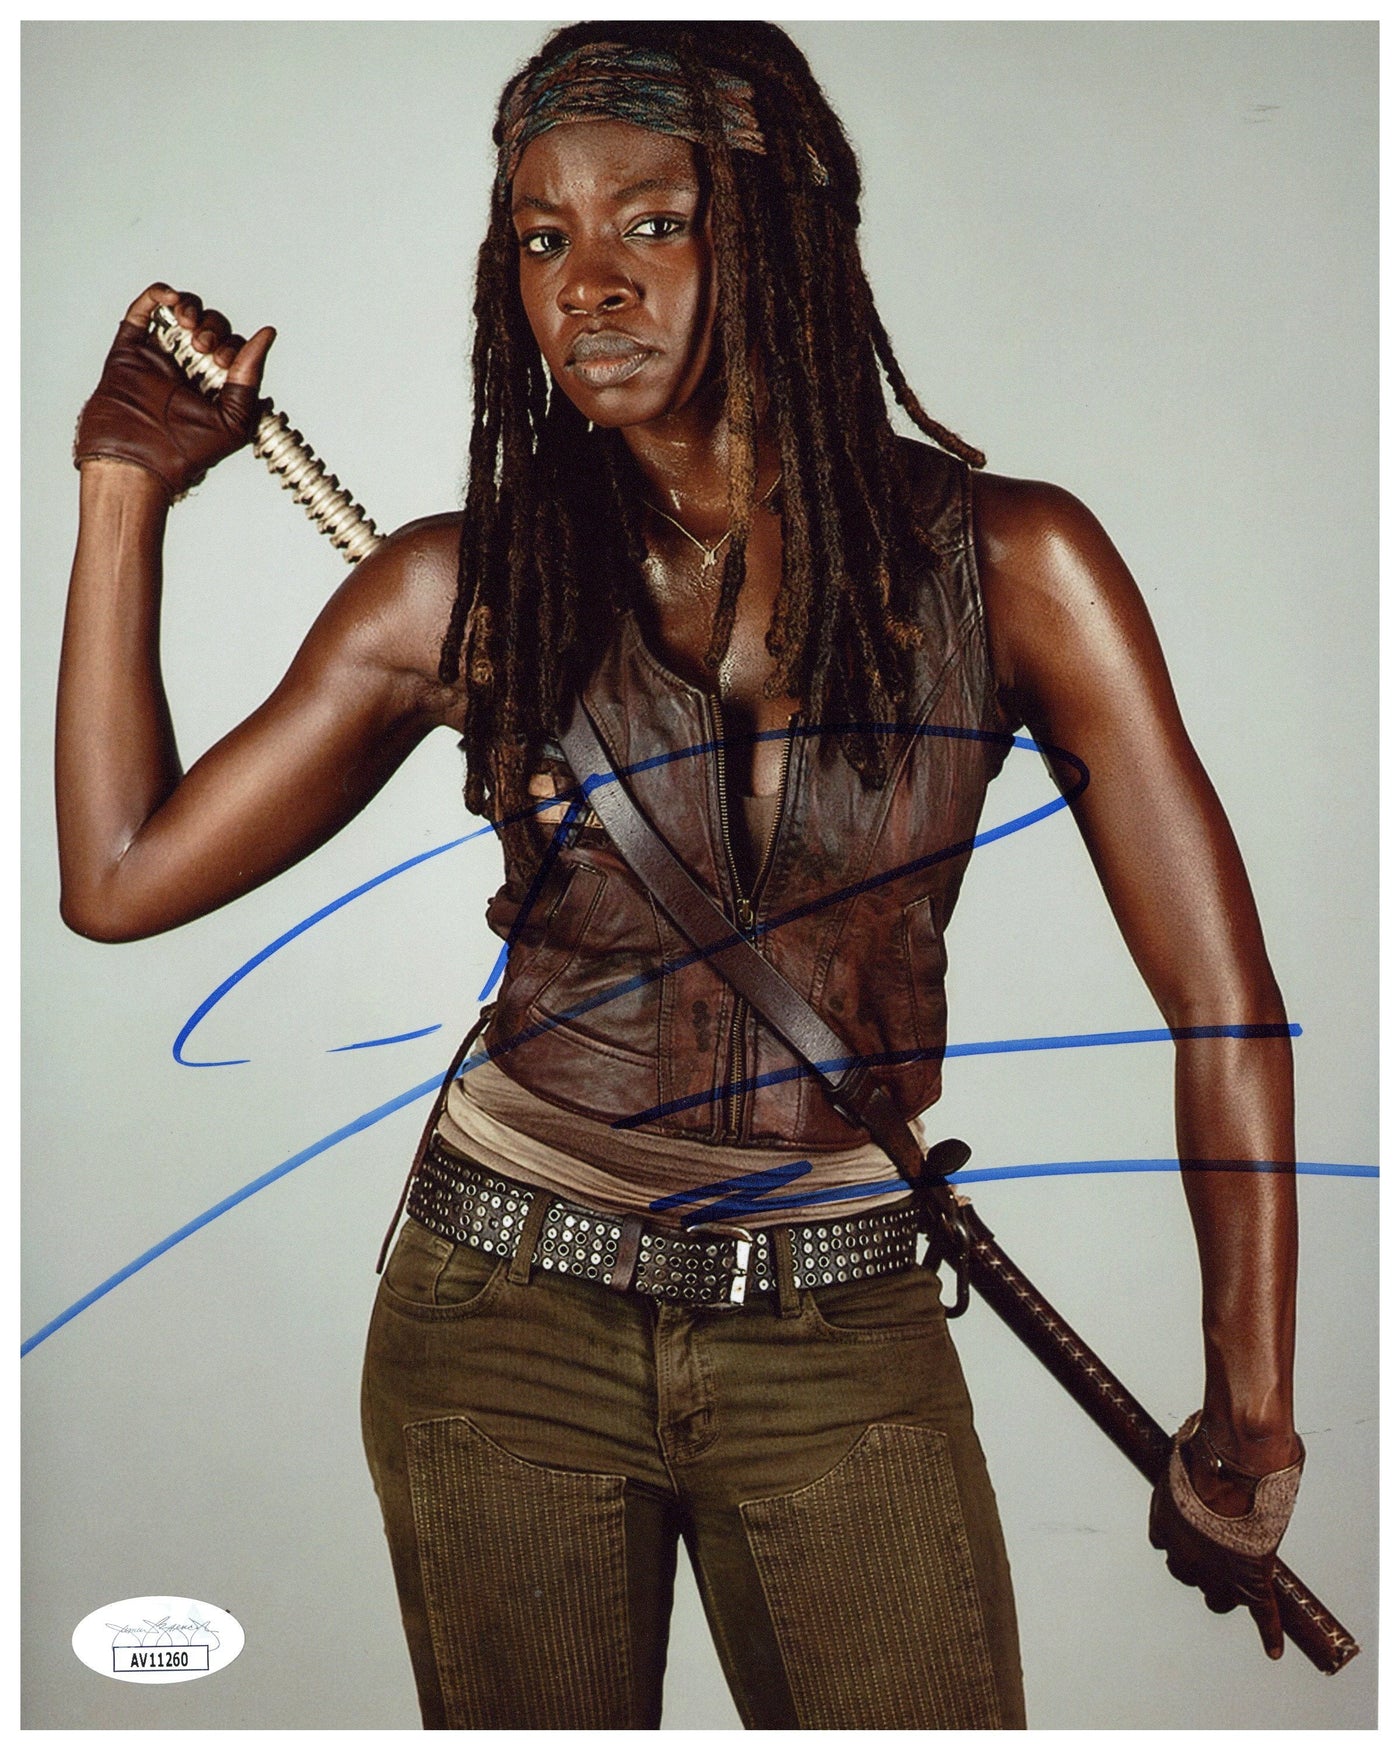 Danai Gurira Signed 8x10 Photo The Walking Dead Michonne Autographed JSA COA #7